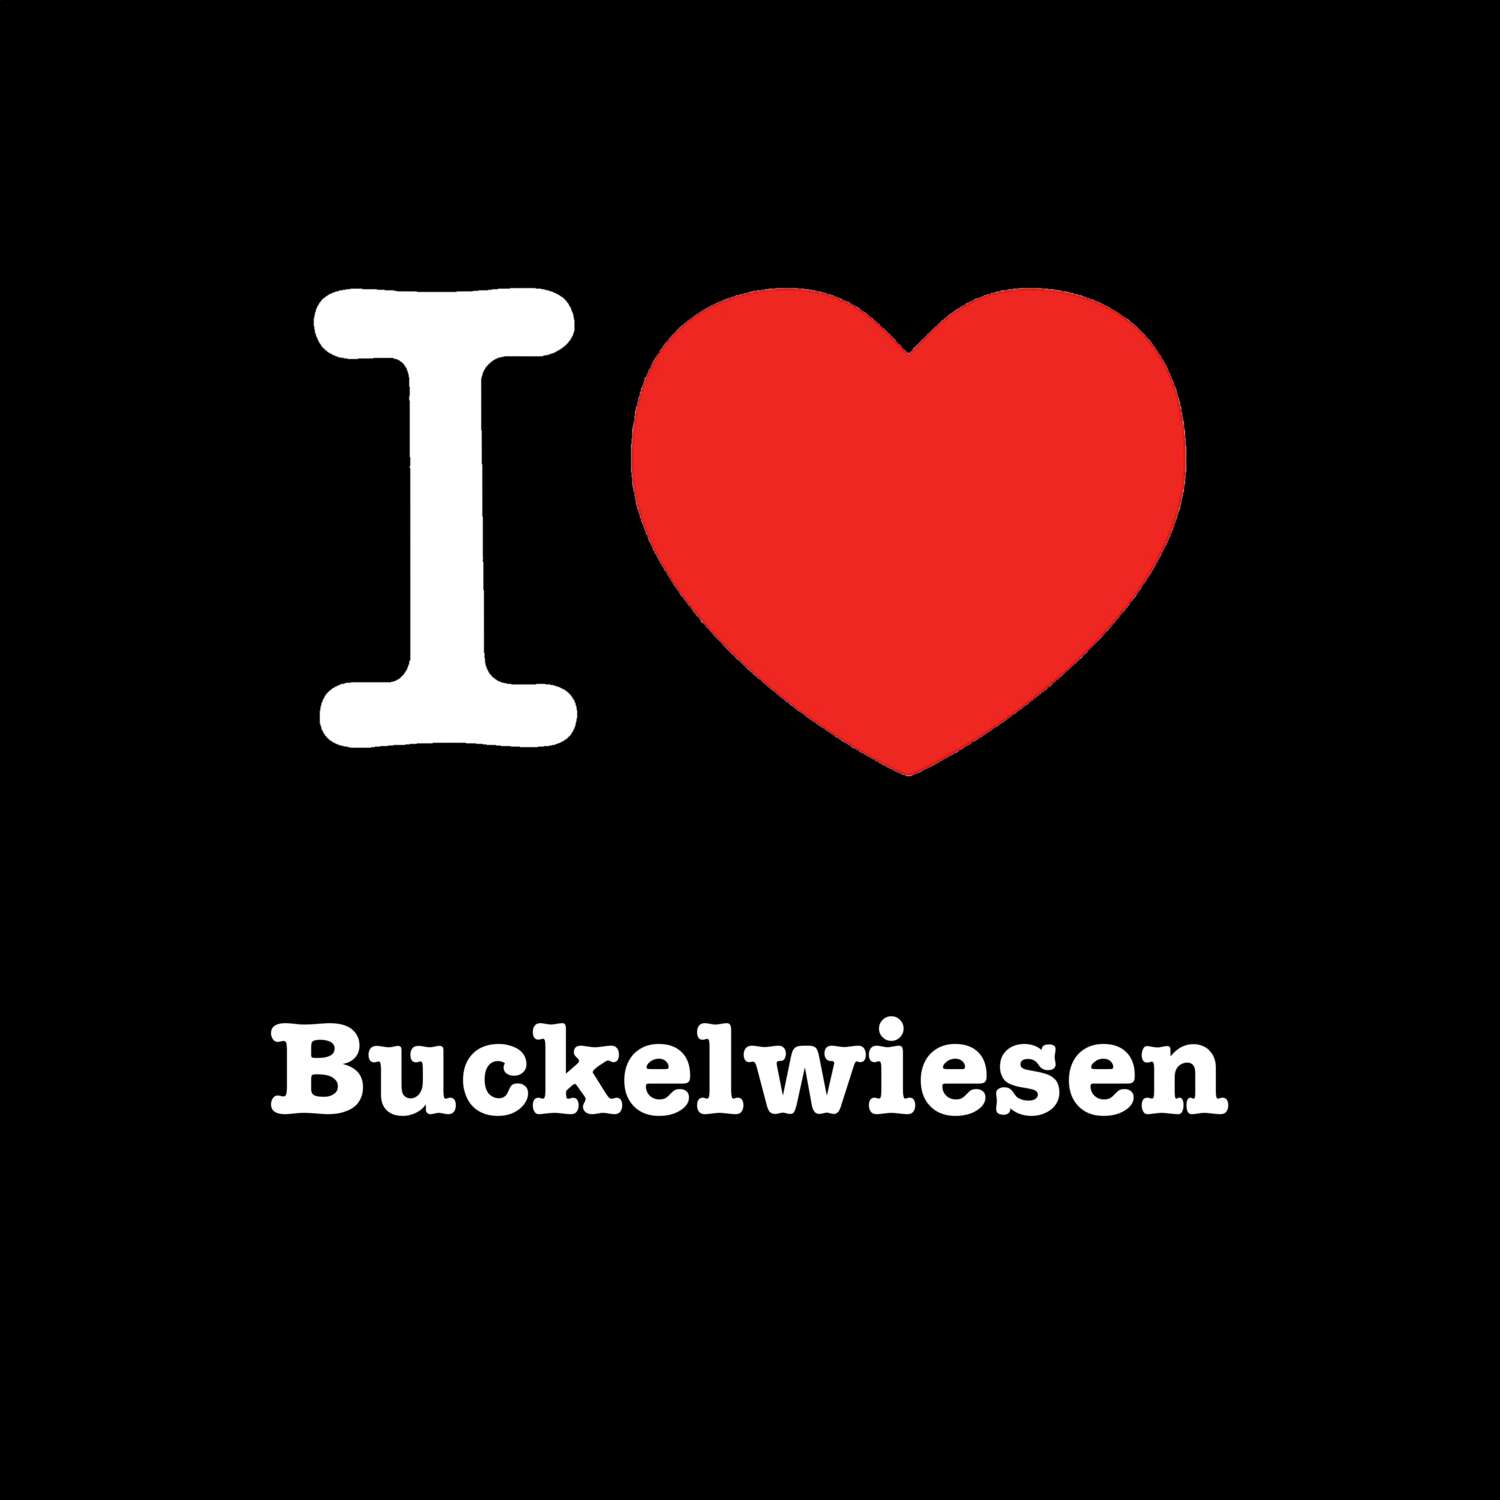 Buckelwiesen T-Shirt »I love«